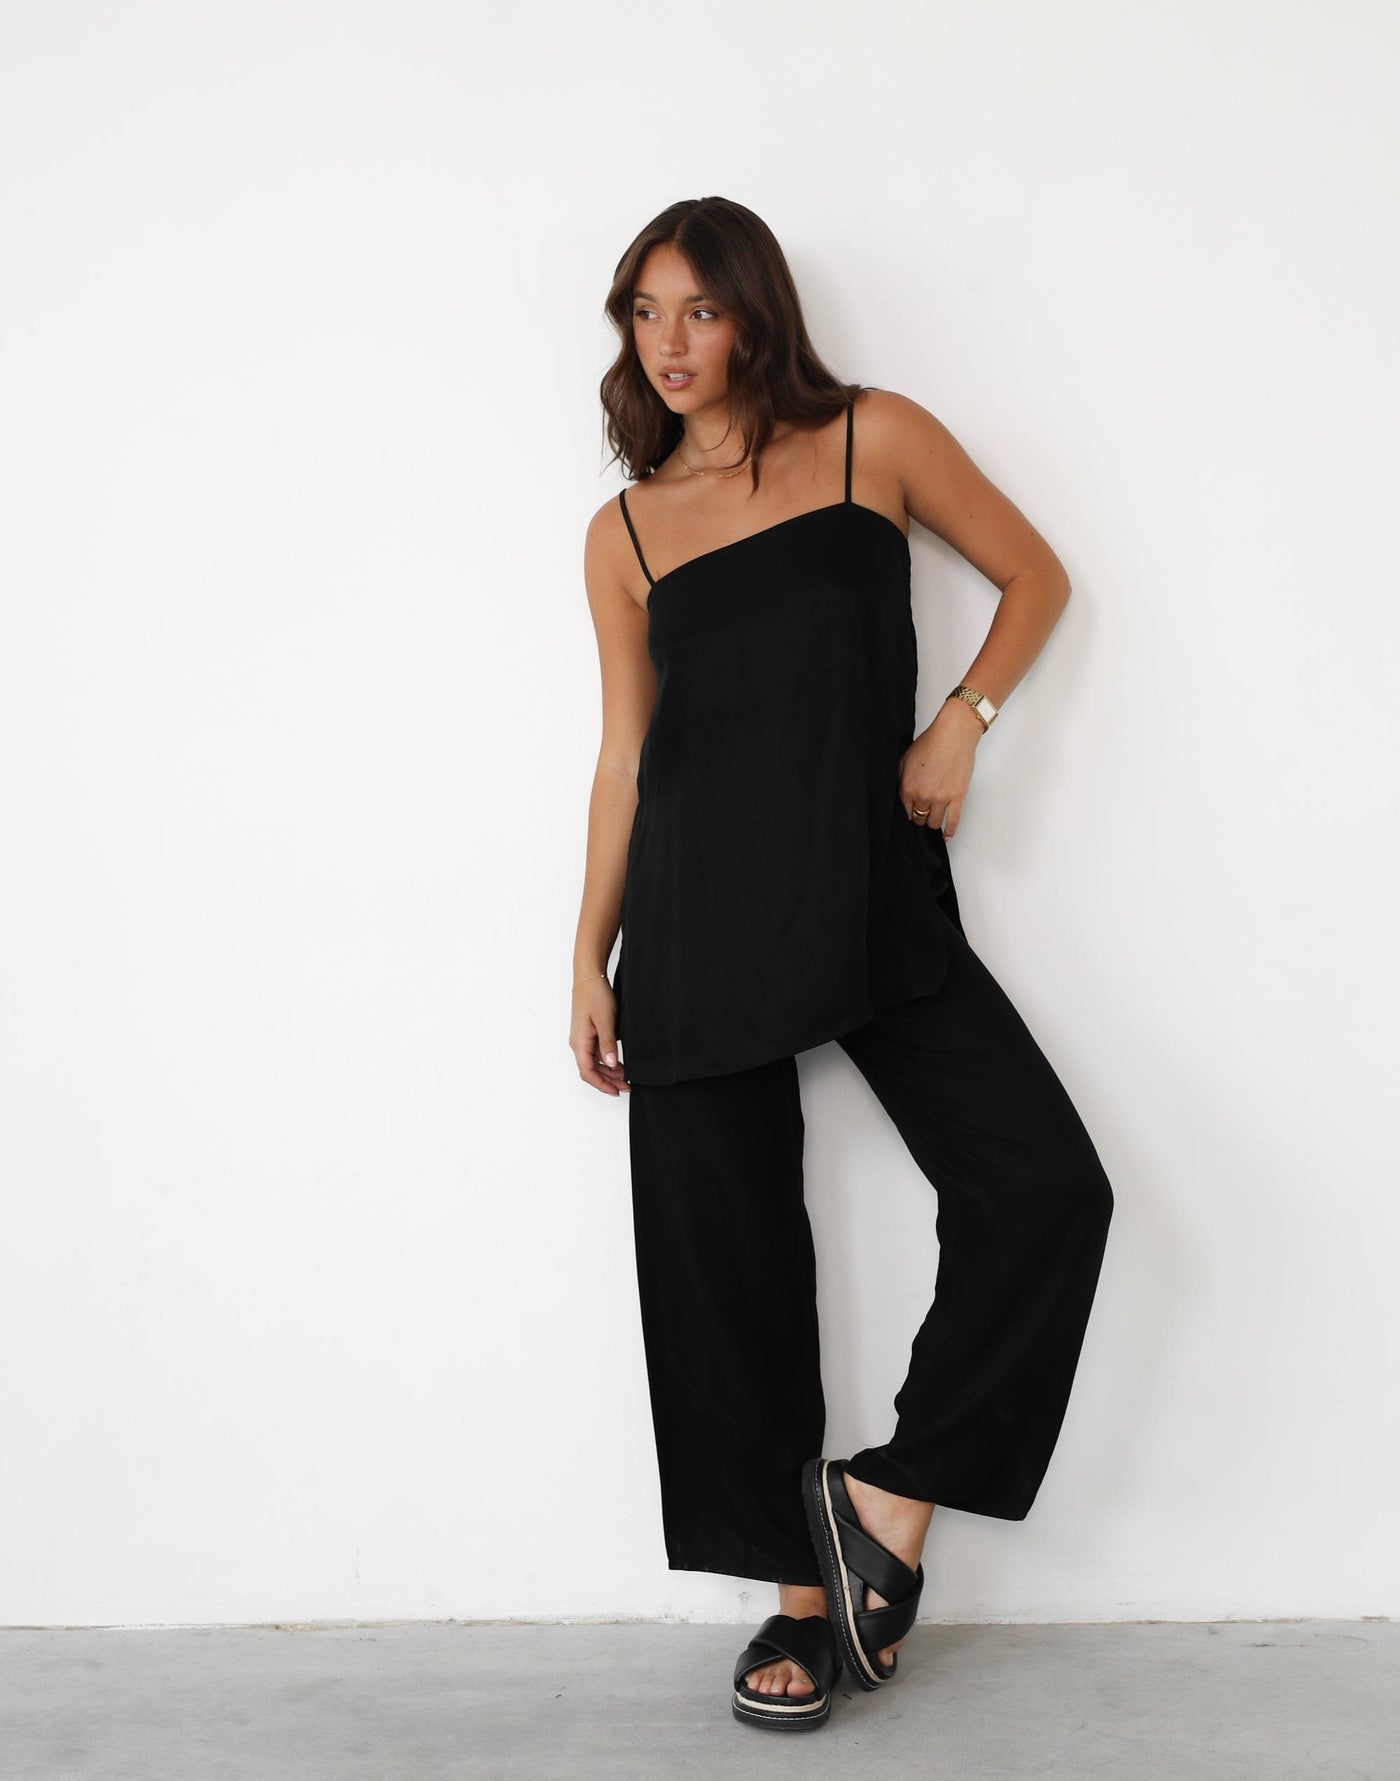 Elska Pants (Black) | Adjustable Flowy Pants - Women's Pants - Charcoal Clothing